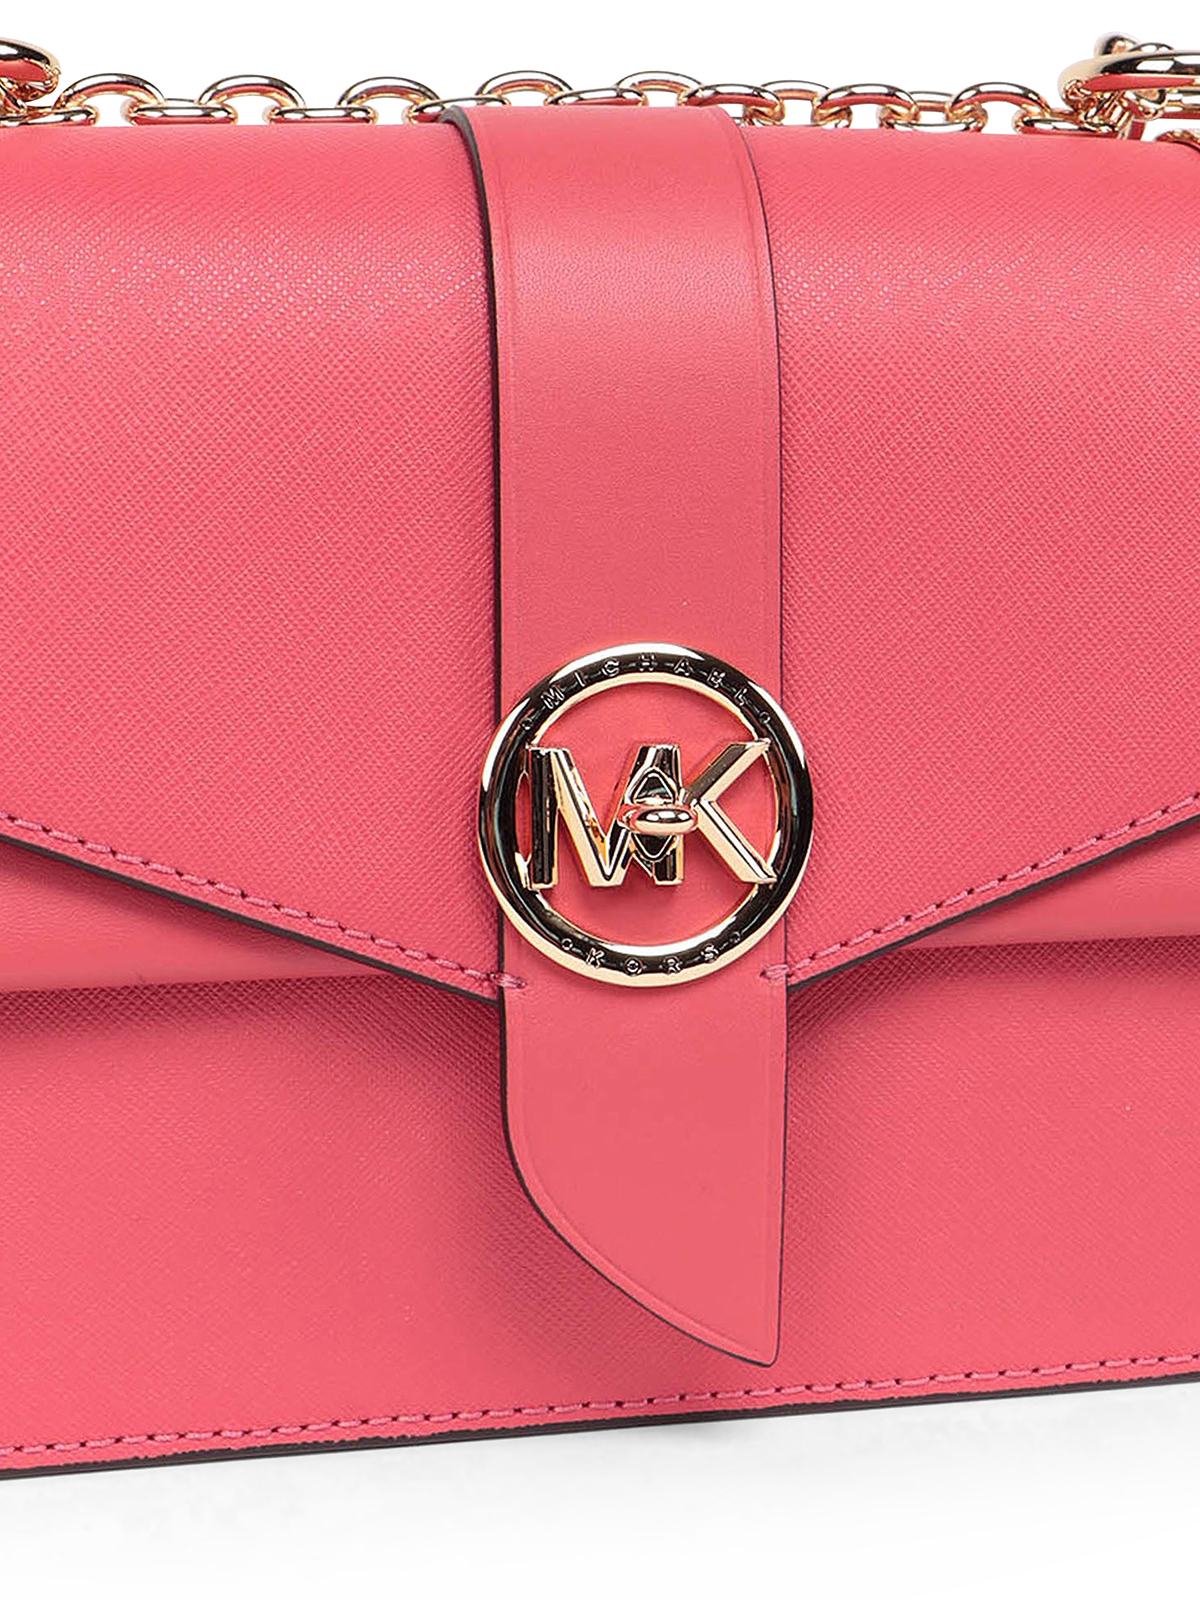 Michael Kors Ladies Greenwich Small Saffiano Leather Crossbody Bag - Crimson